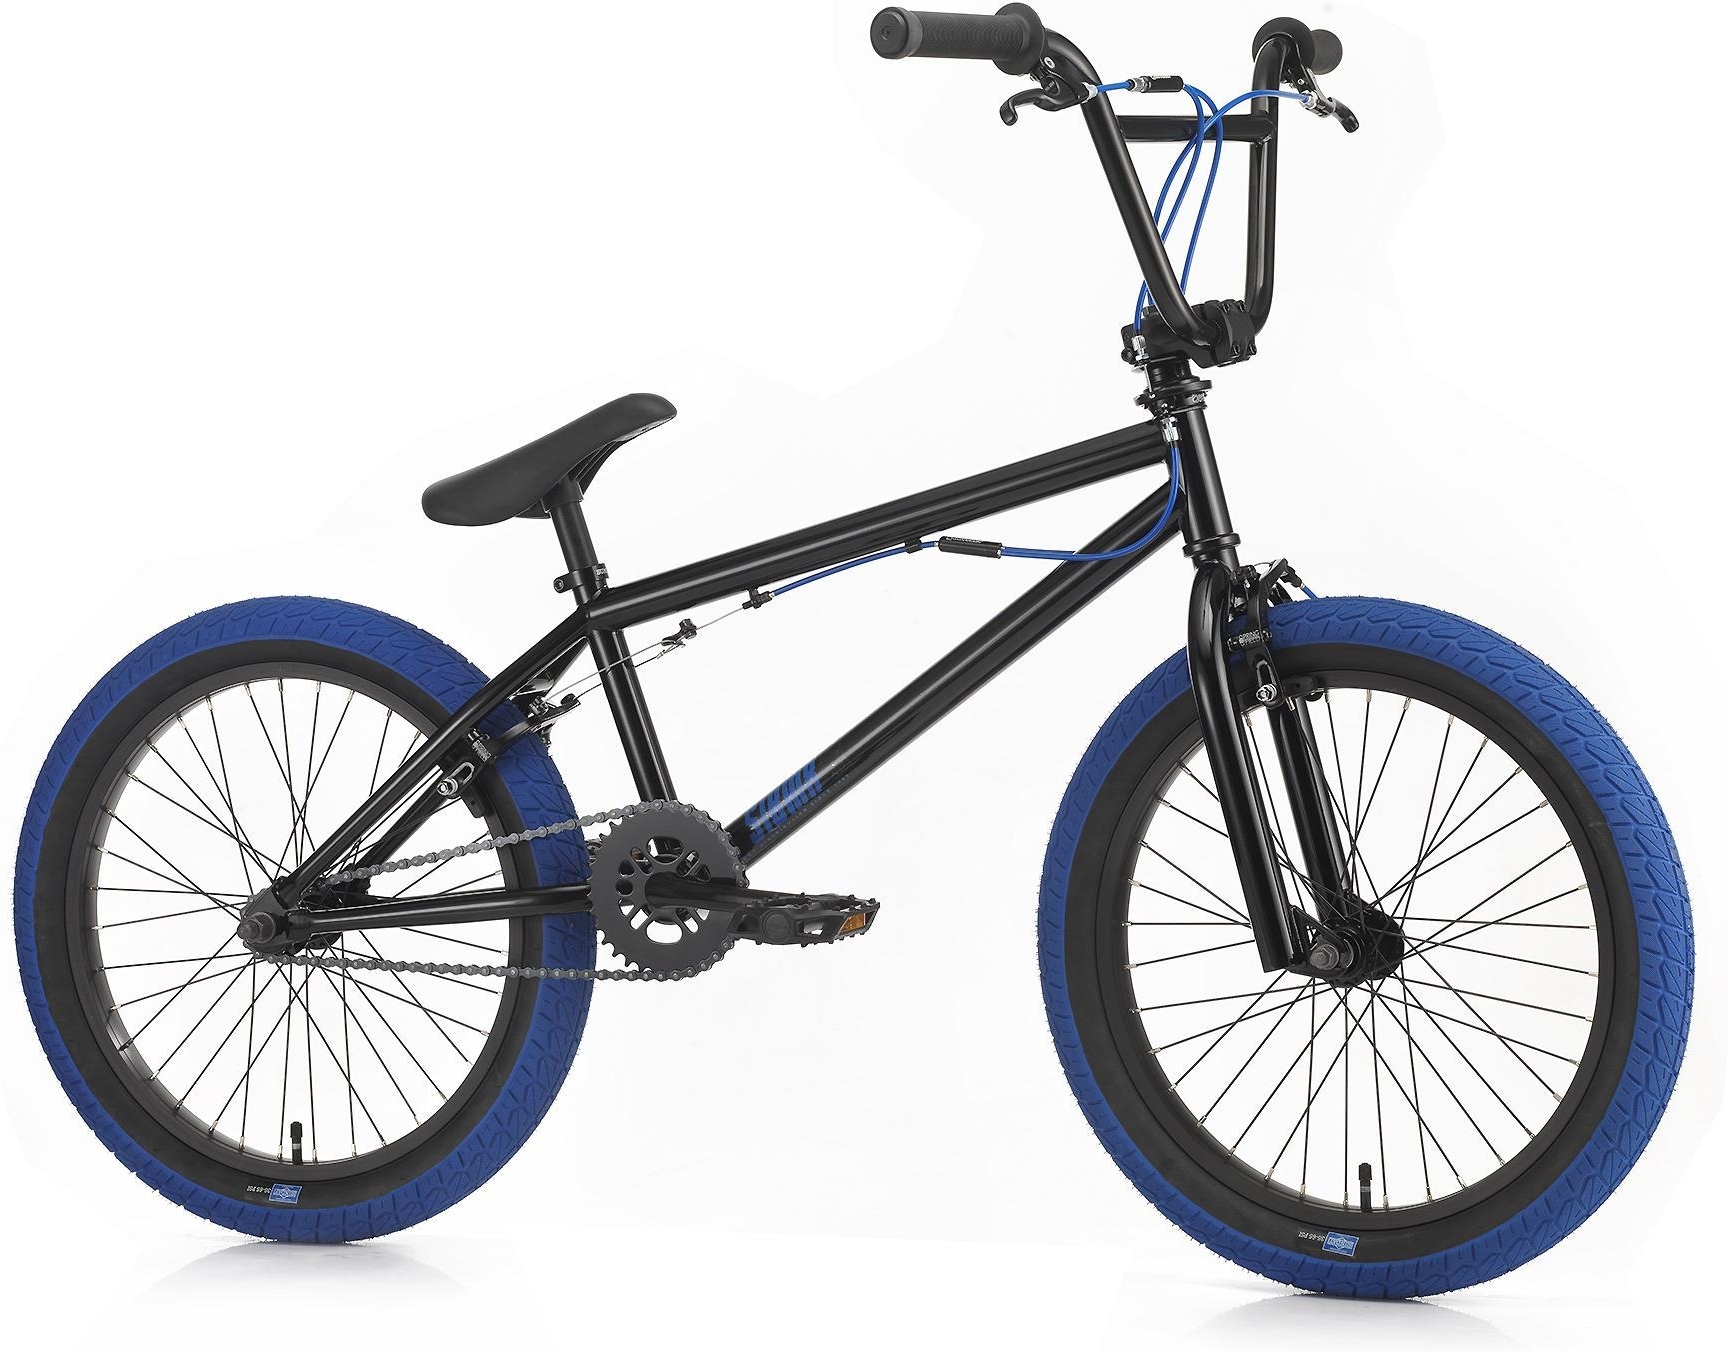 Bicicleta BMX SIBMX FS-1 partir de abril 2021) >